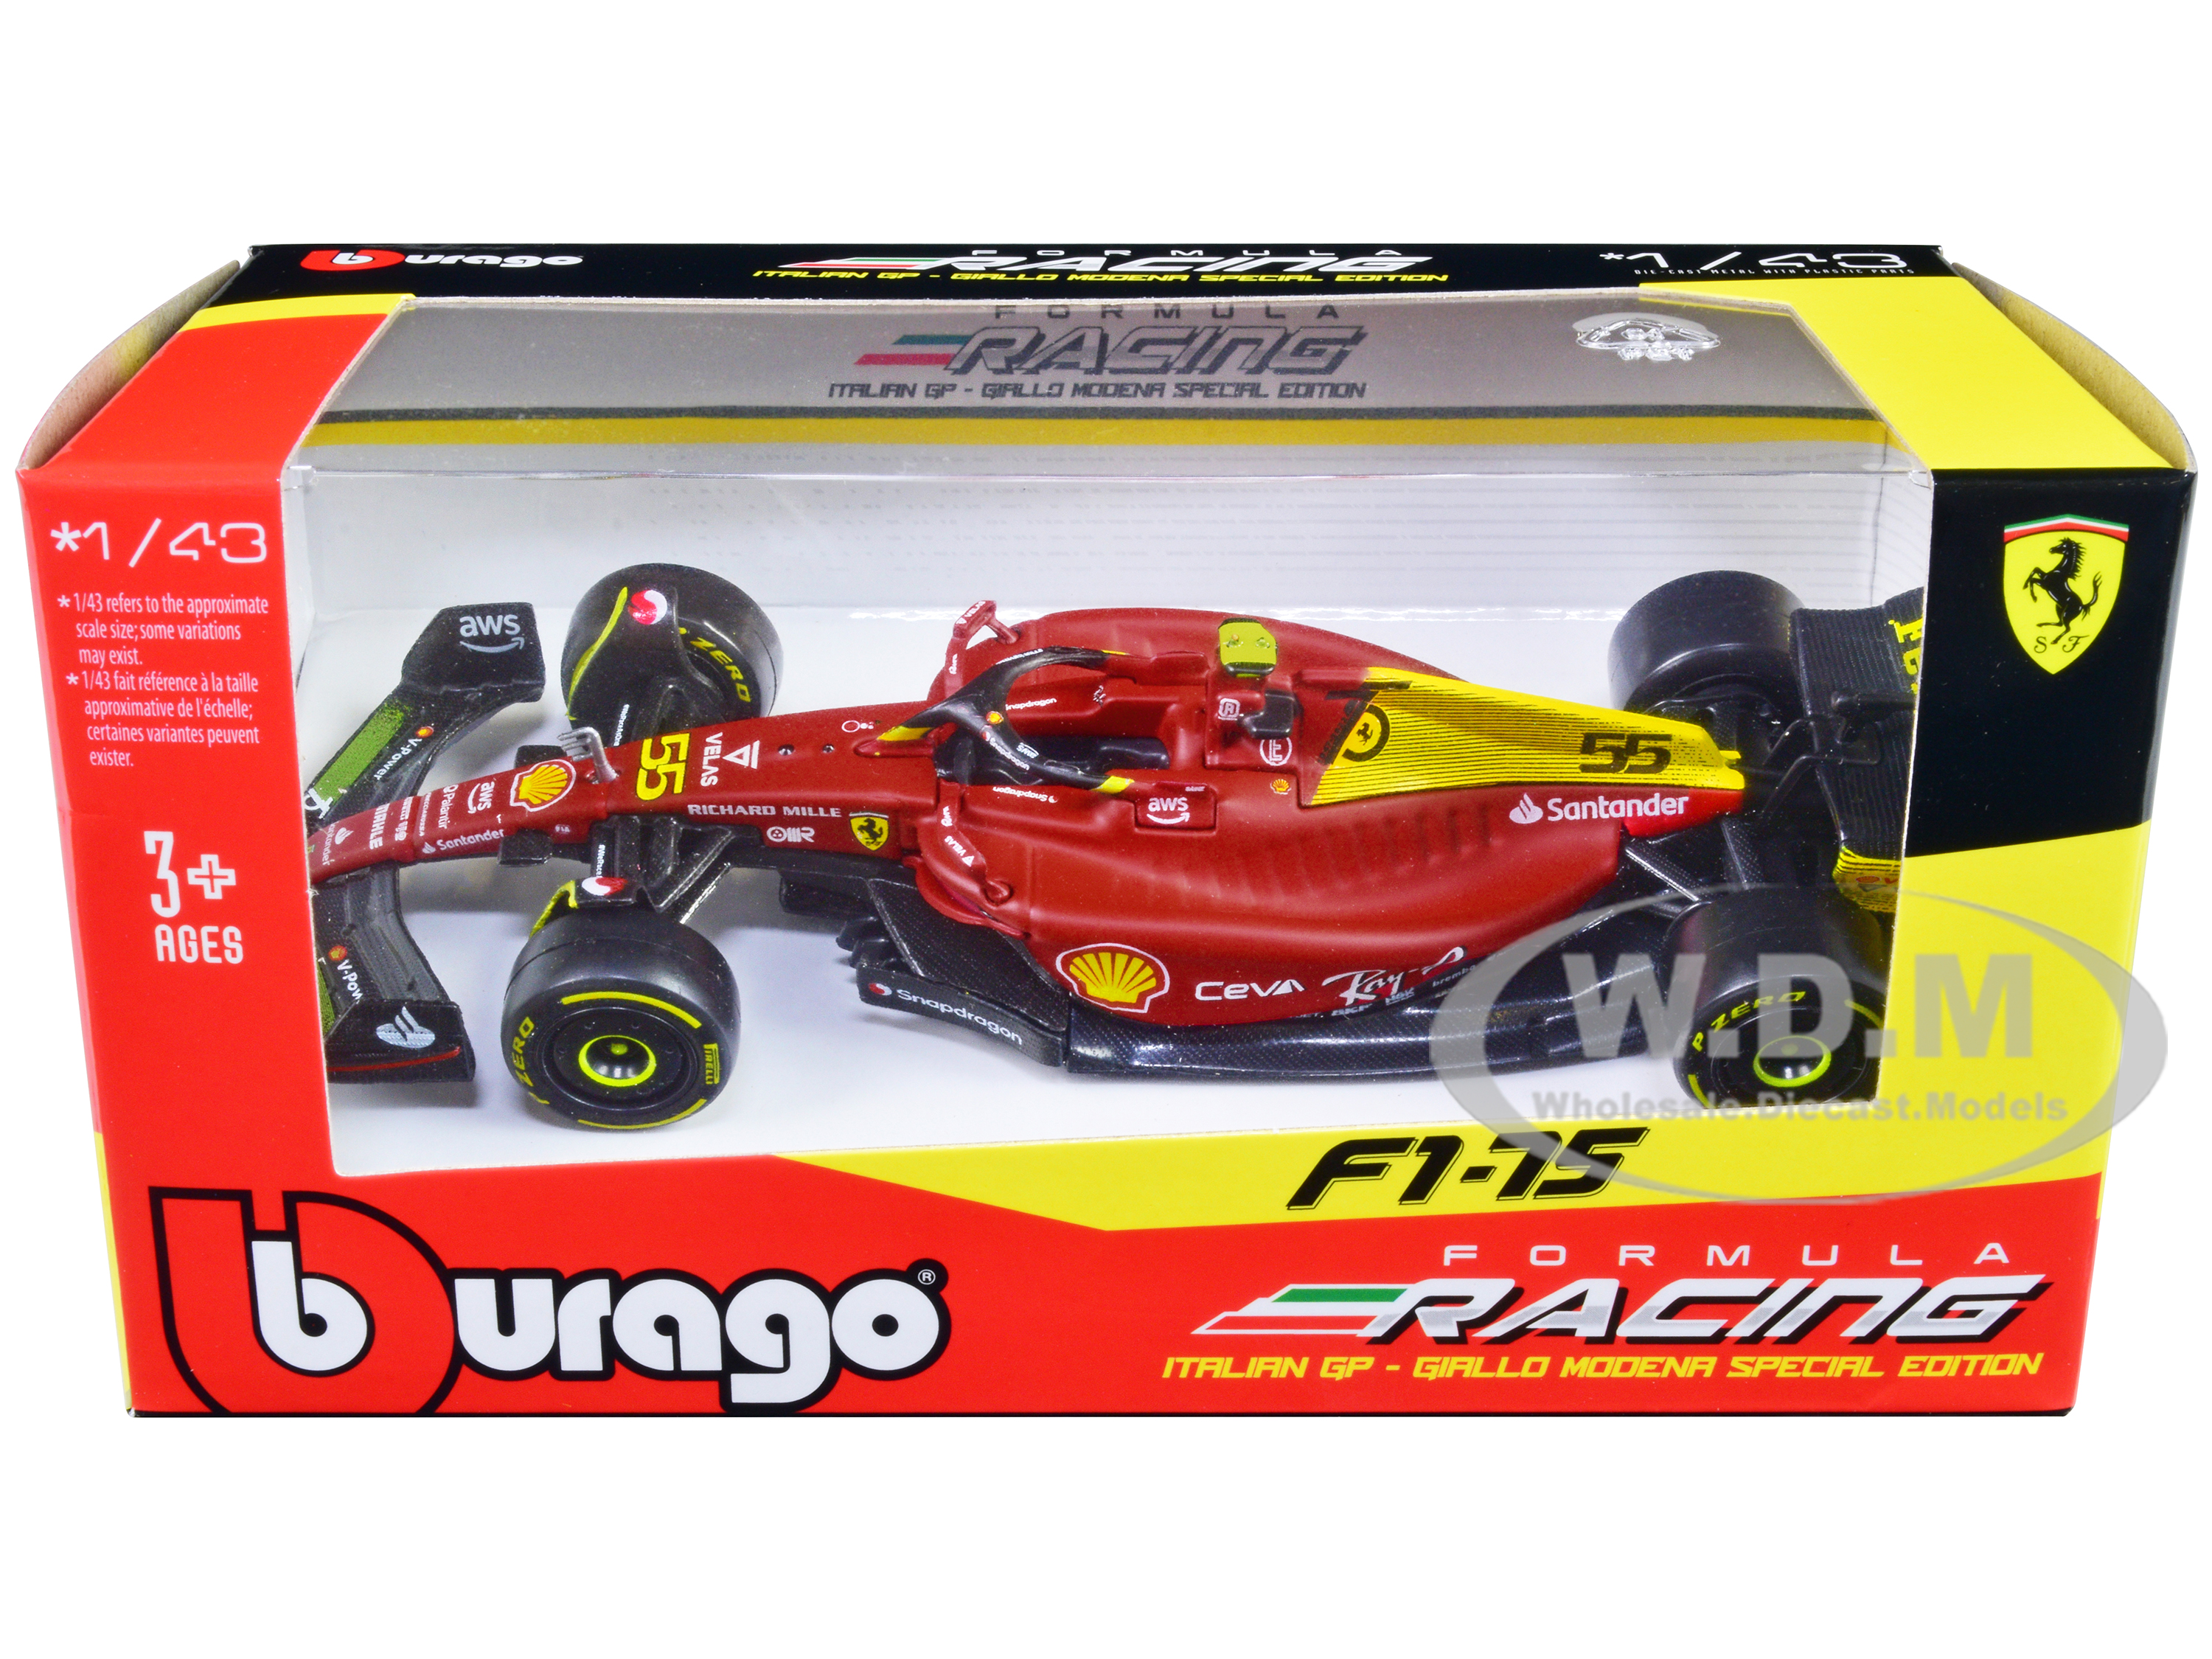 Ferrari F1-75 55 Carlos Sainz "Giallo Modena" Formula One F1 Italian GP (2022) "Formula Racing" Series 1/43 Diecast Model Car by Bburago